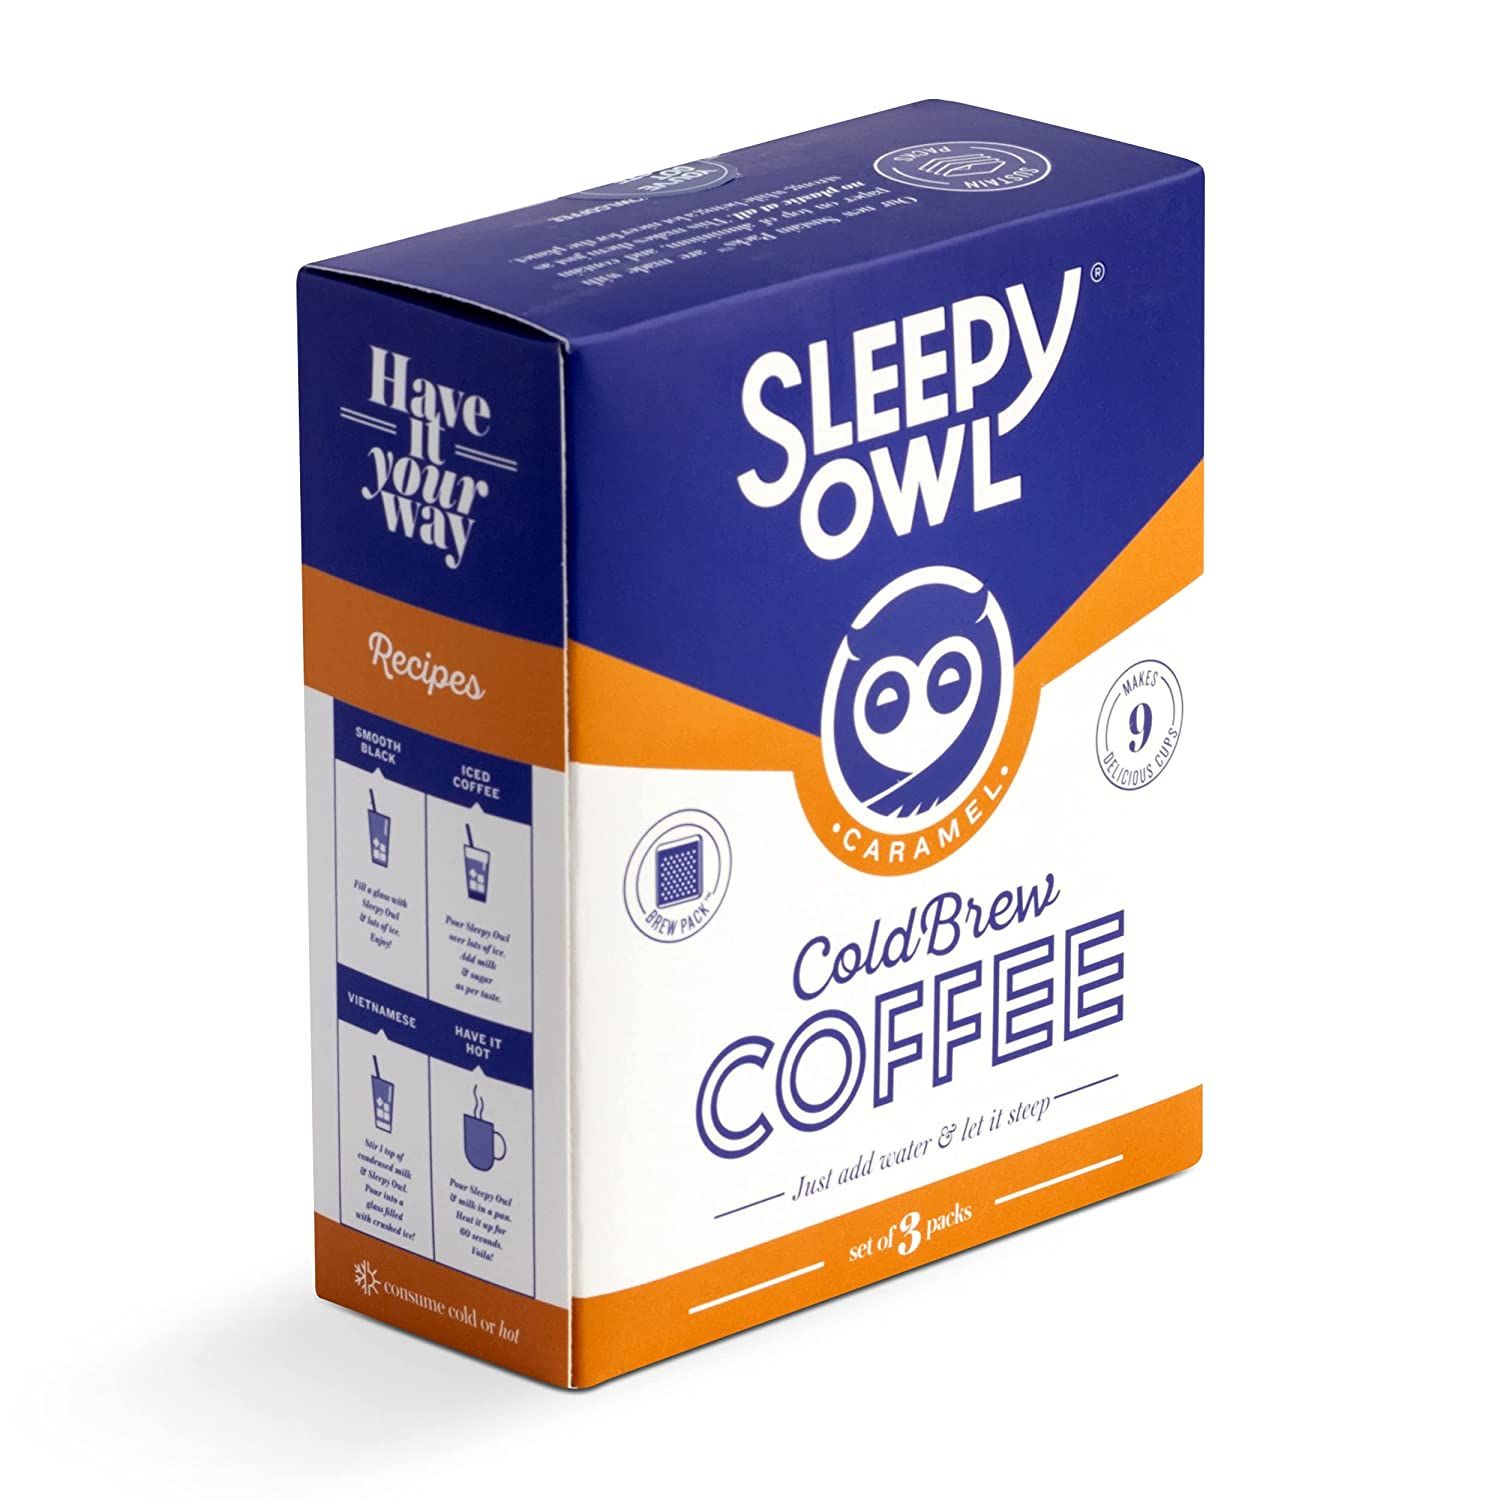 Sleepy Owl Coffee Cold Brew Caramel Pack Image